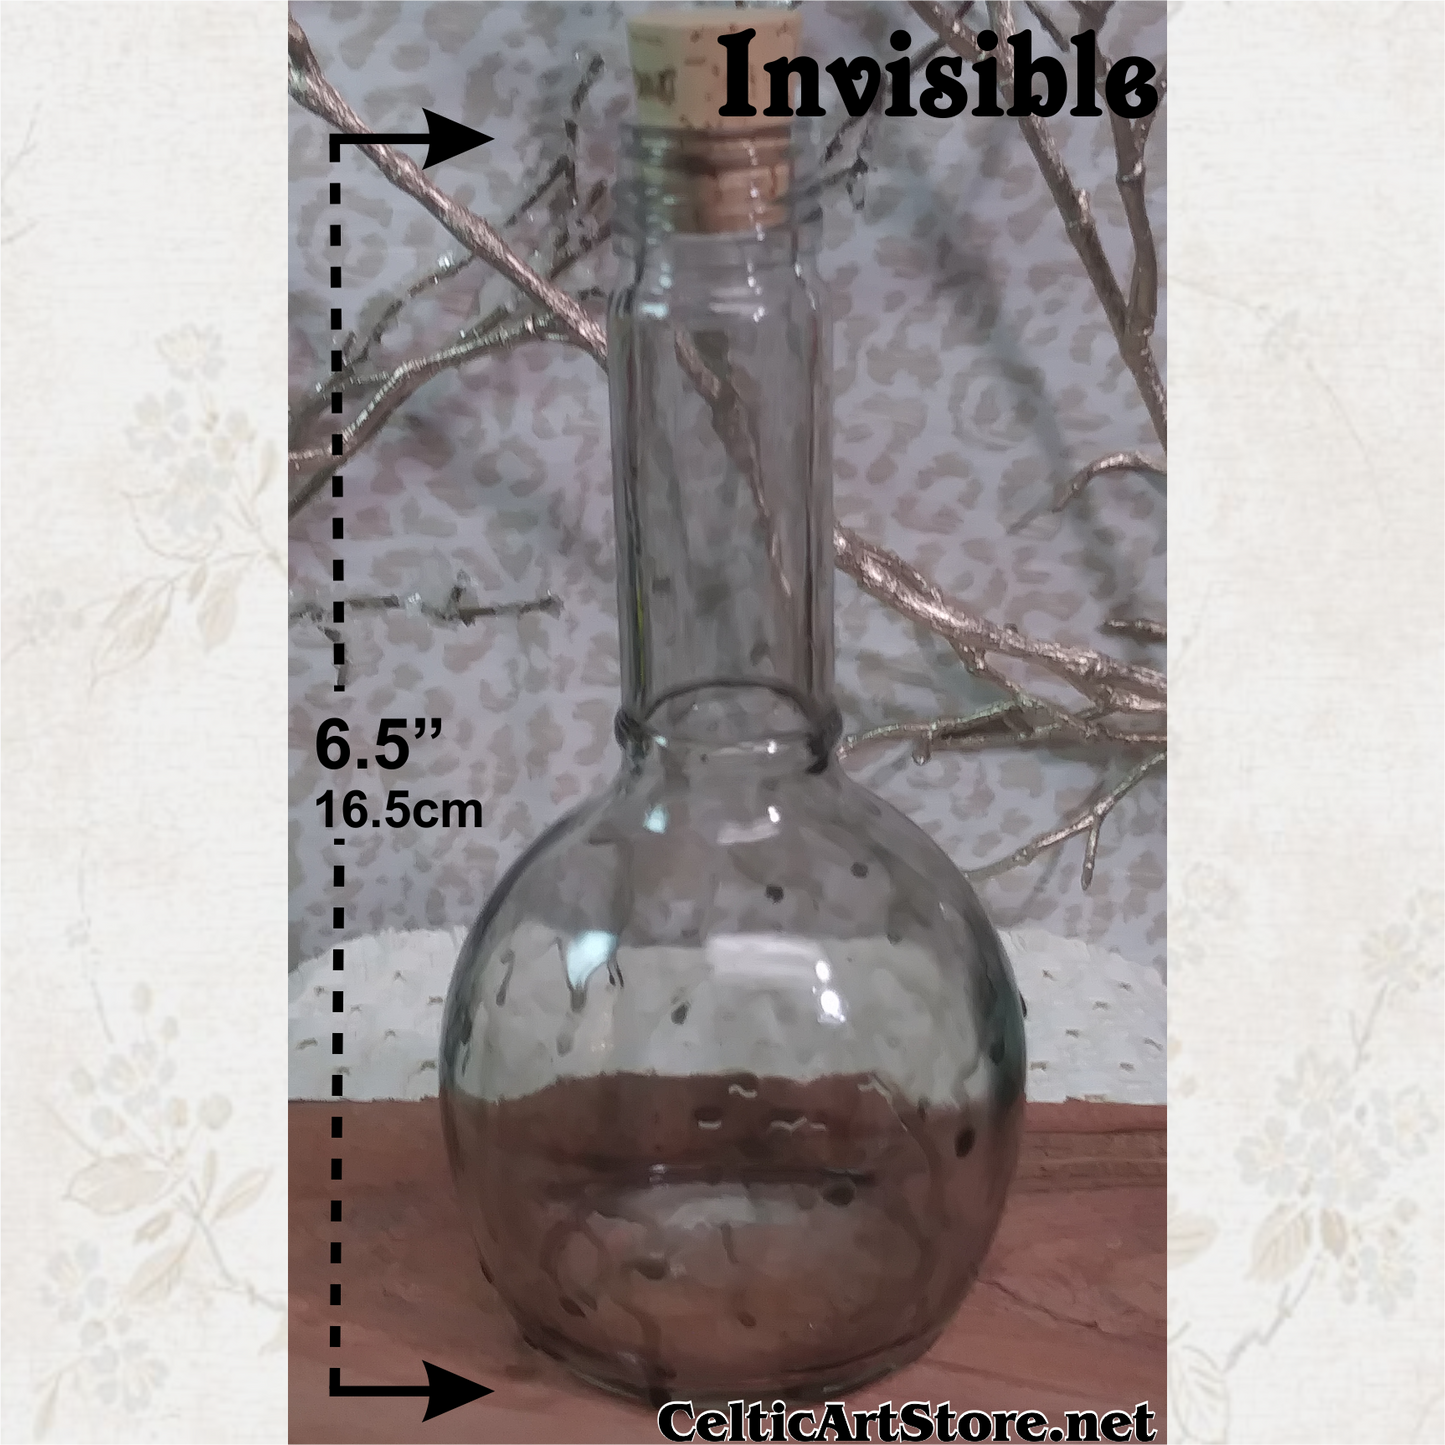 INVISIBLE Potion Bottle